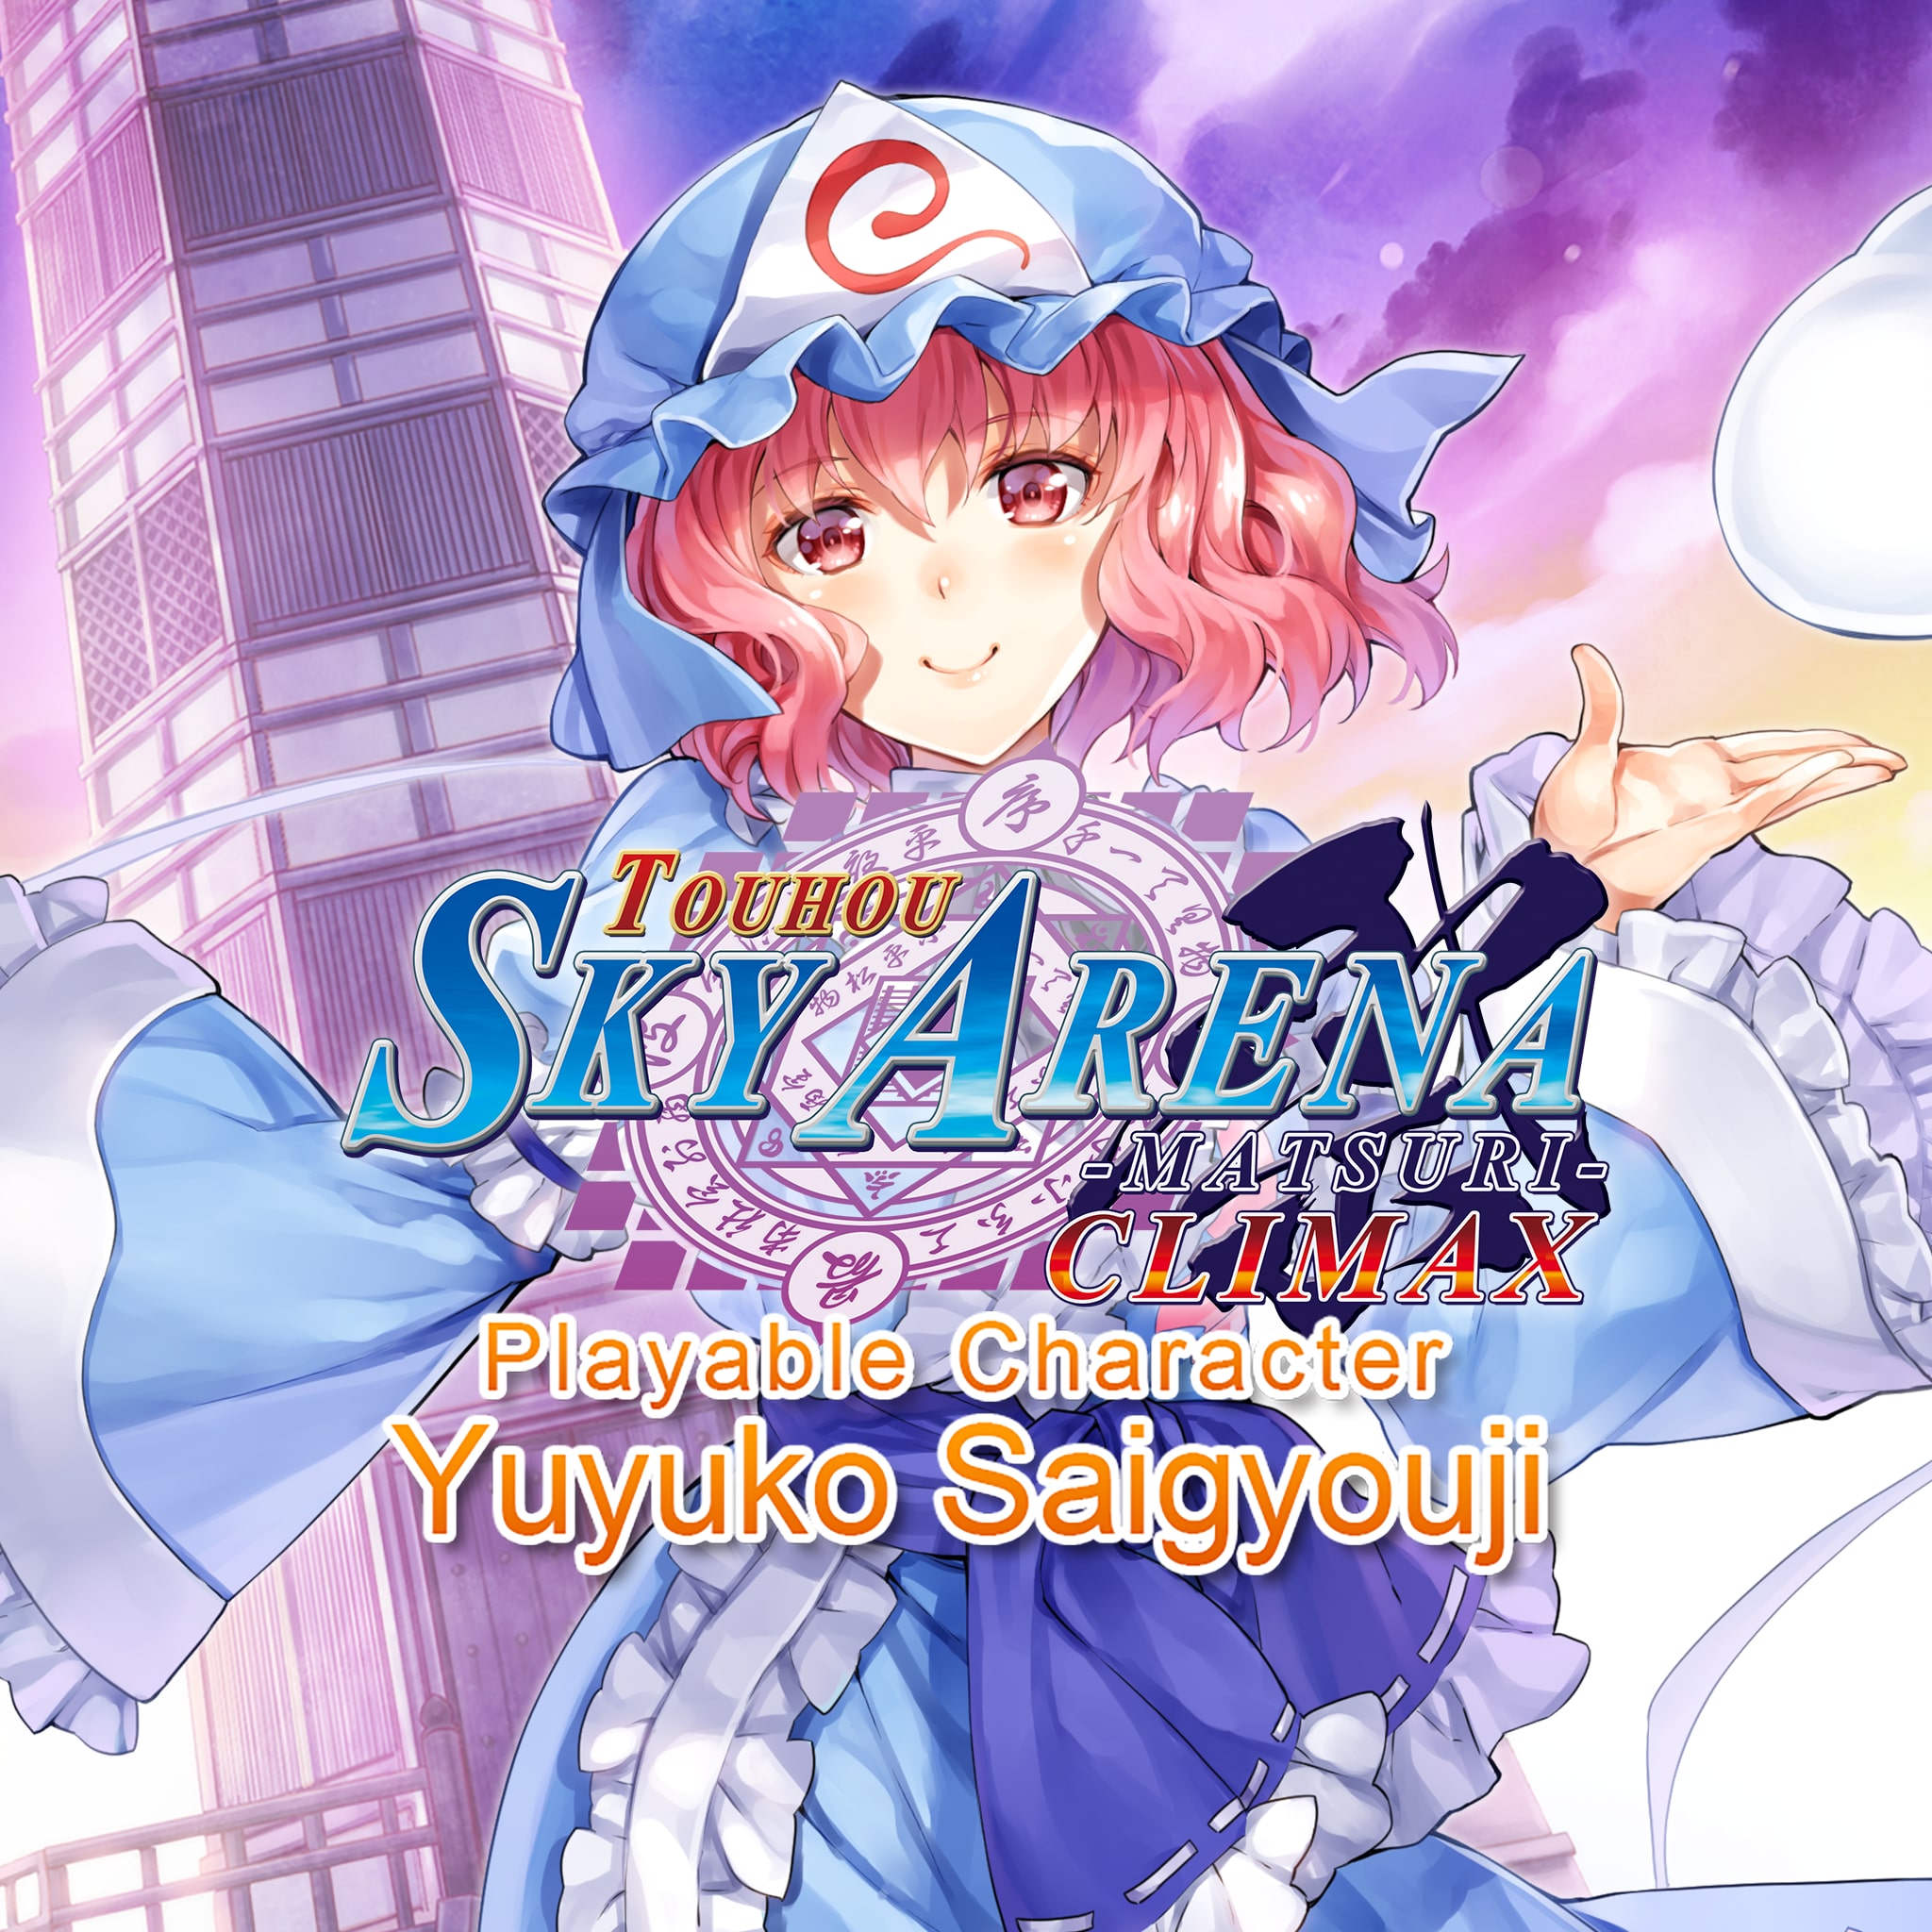 Touhou Sky Arena Playable Character 'Yuyuko Saigyouji'